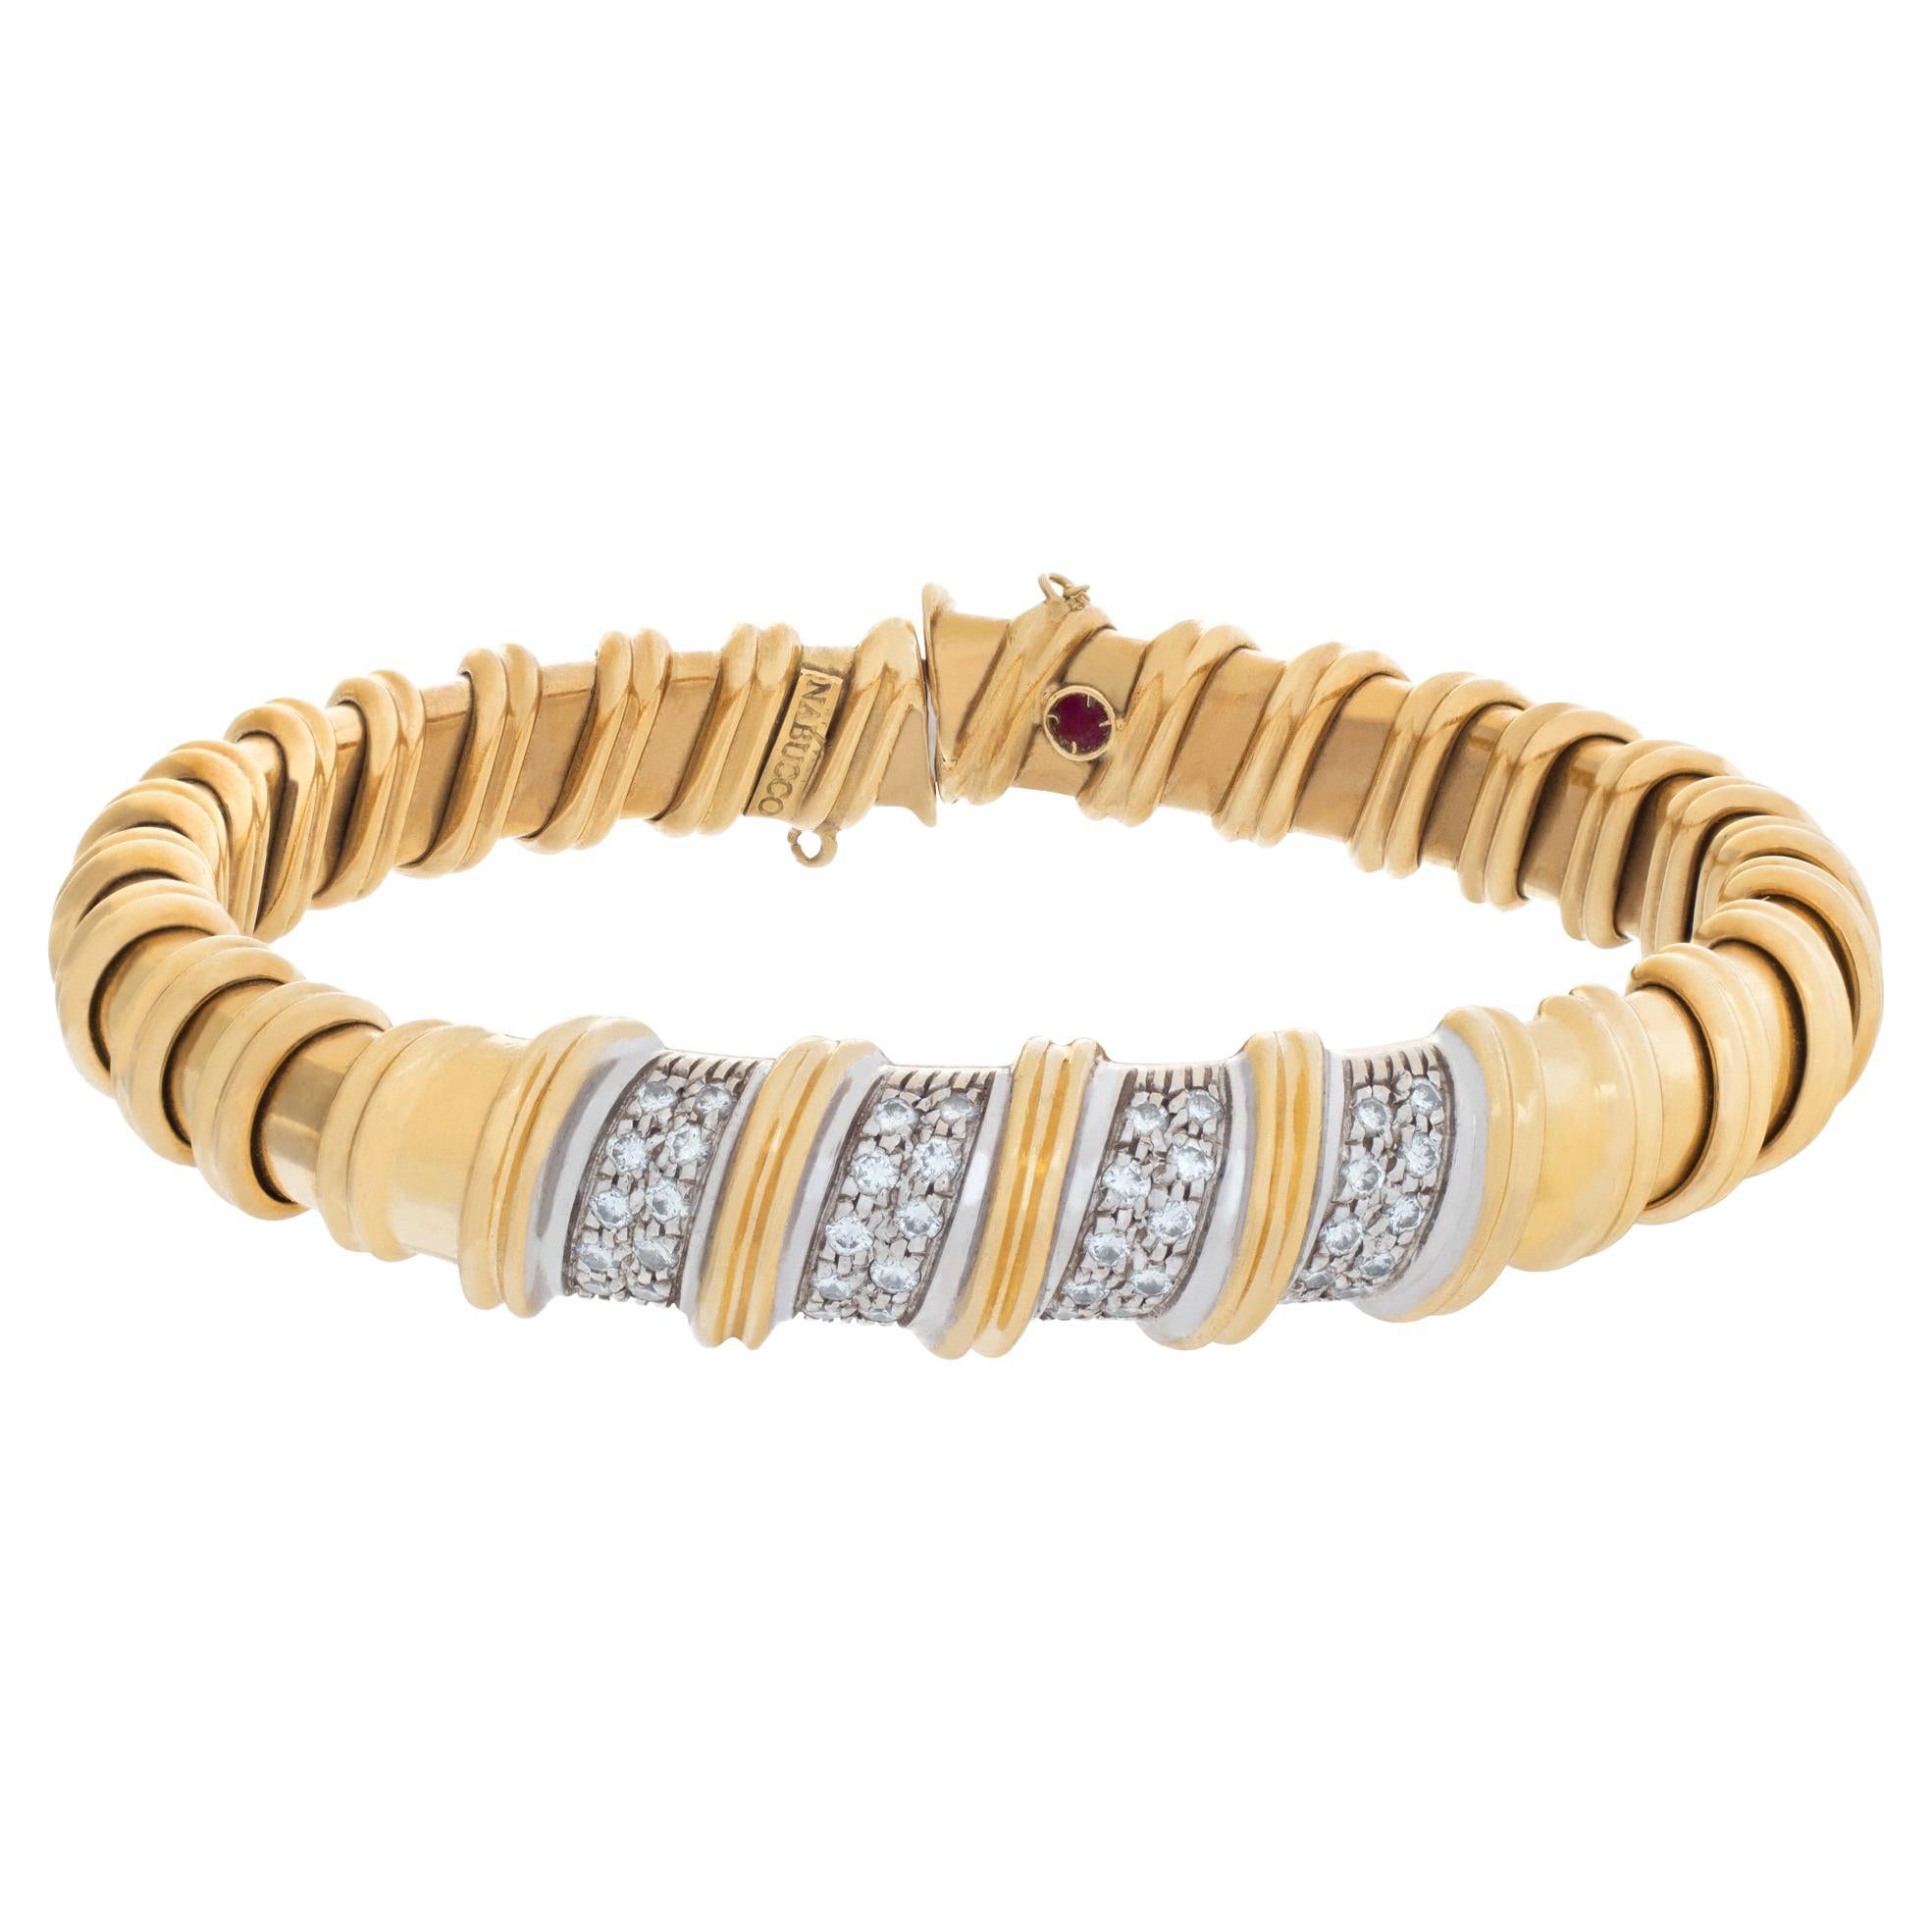 18k Yellow Gold Diamond Bracelet With Approximately 0.5 Carat Tdw